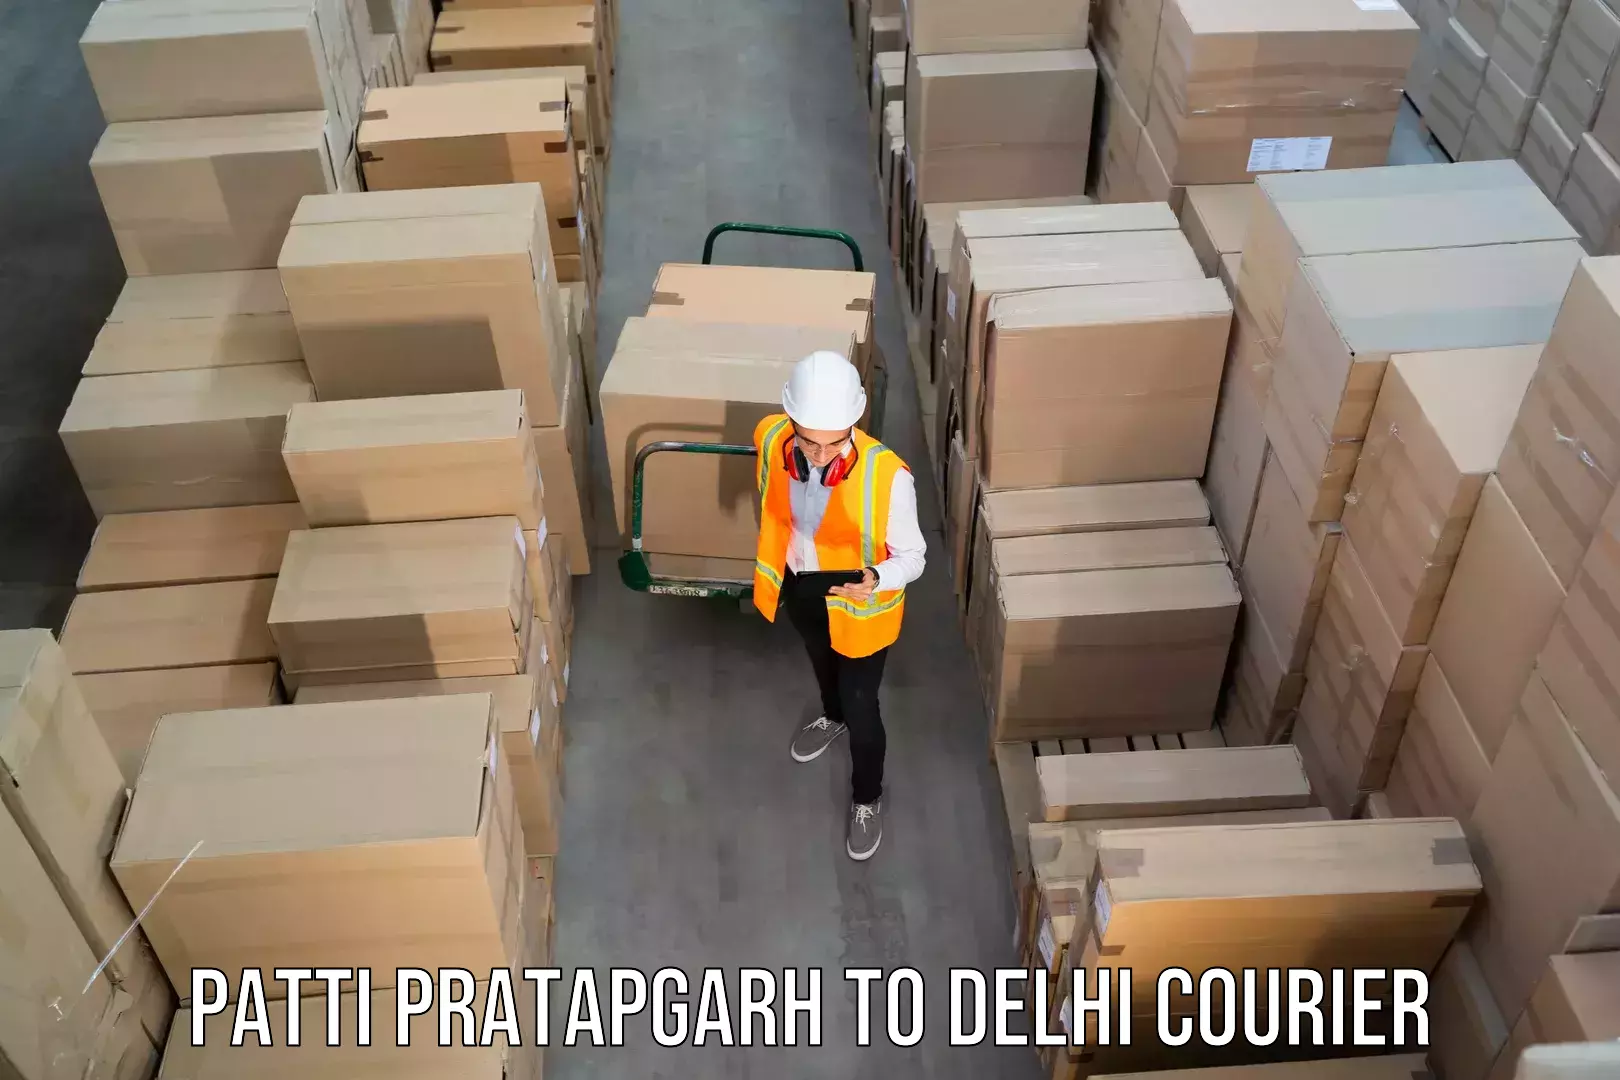 Expedited parcel delivery Patti Pratapgarh to Krishna Nagar